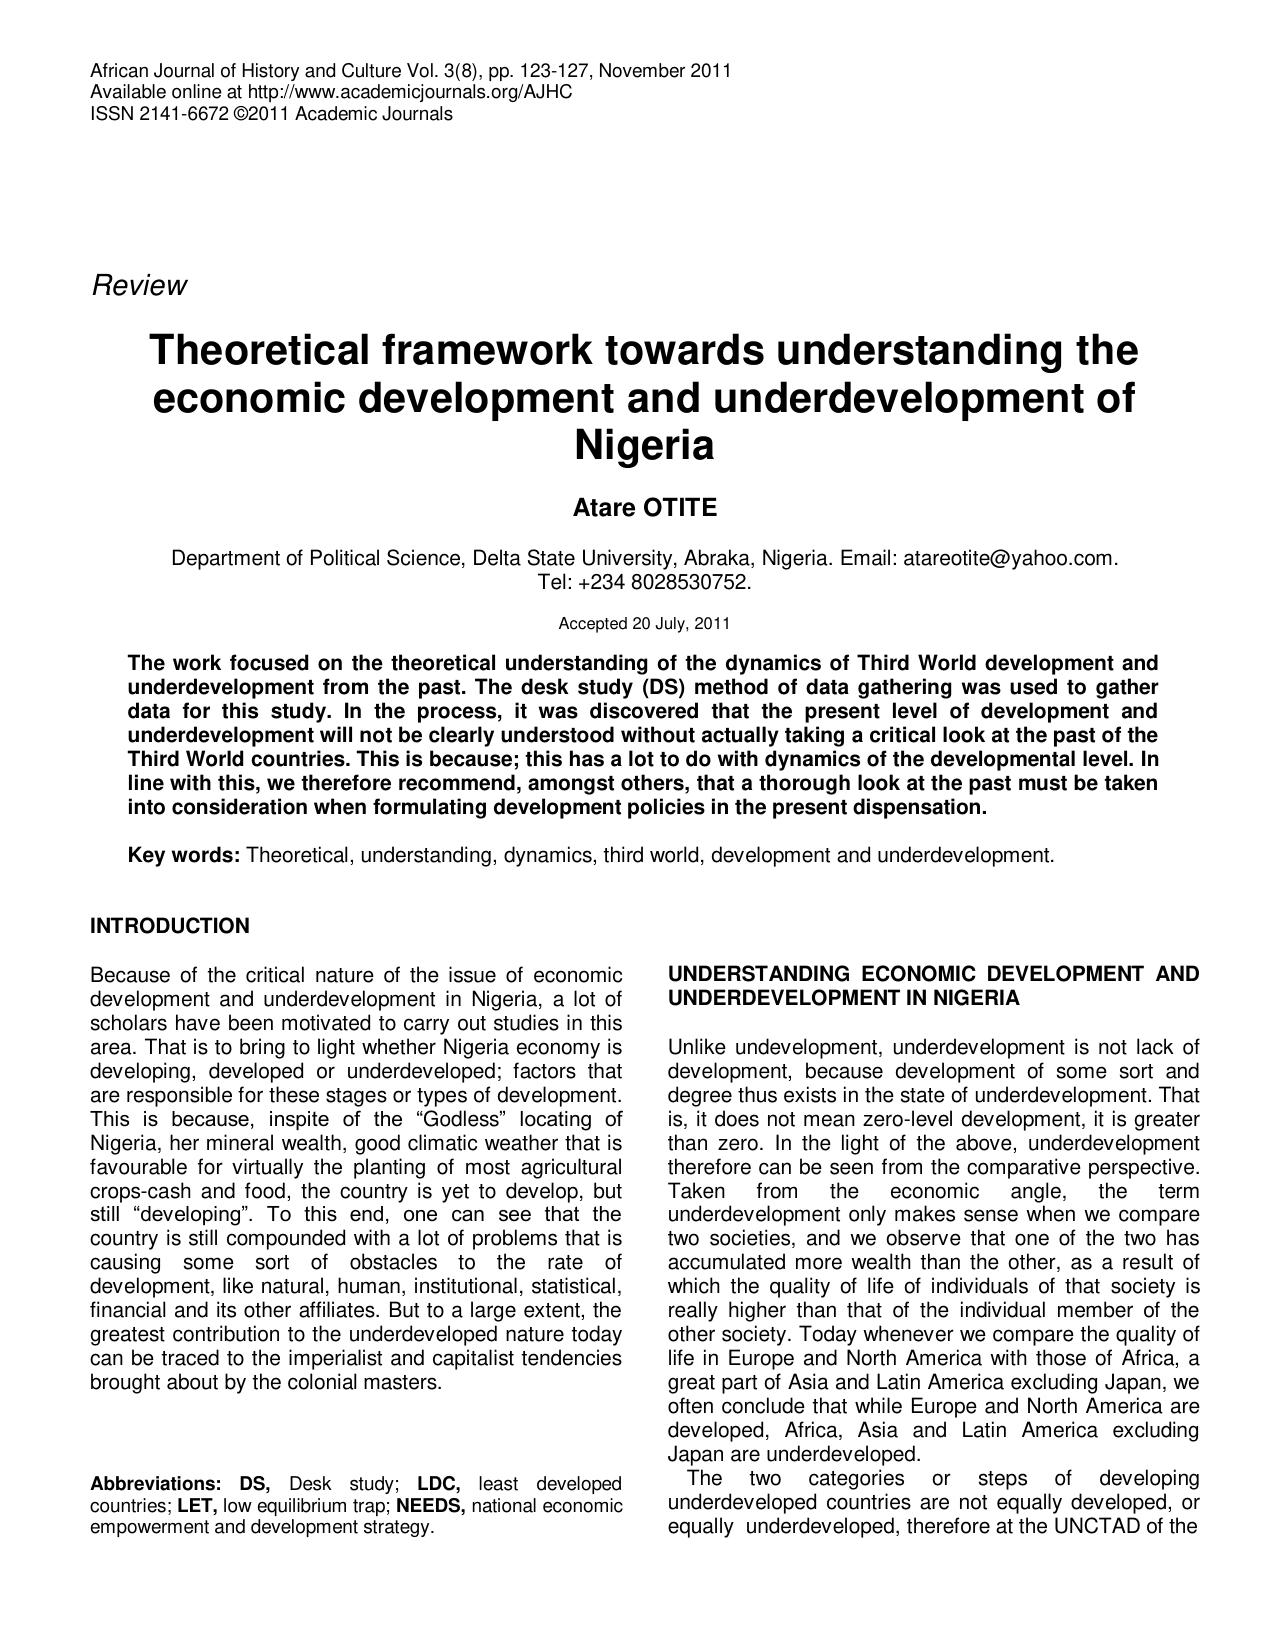 THEORETICAL FRAMEWORK TOWARDS UNDERSTANDING THE ECONOMIC DEVELOPMENT AND UNDERDEVELOPMENT OF NIGERIA